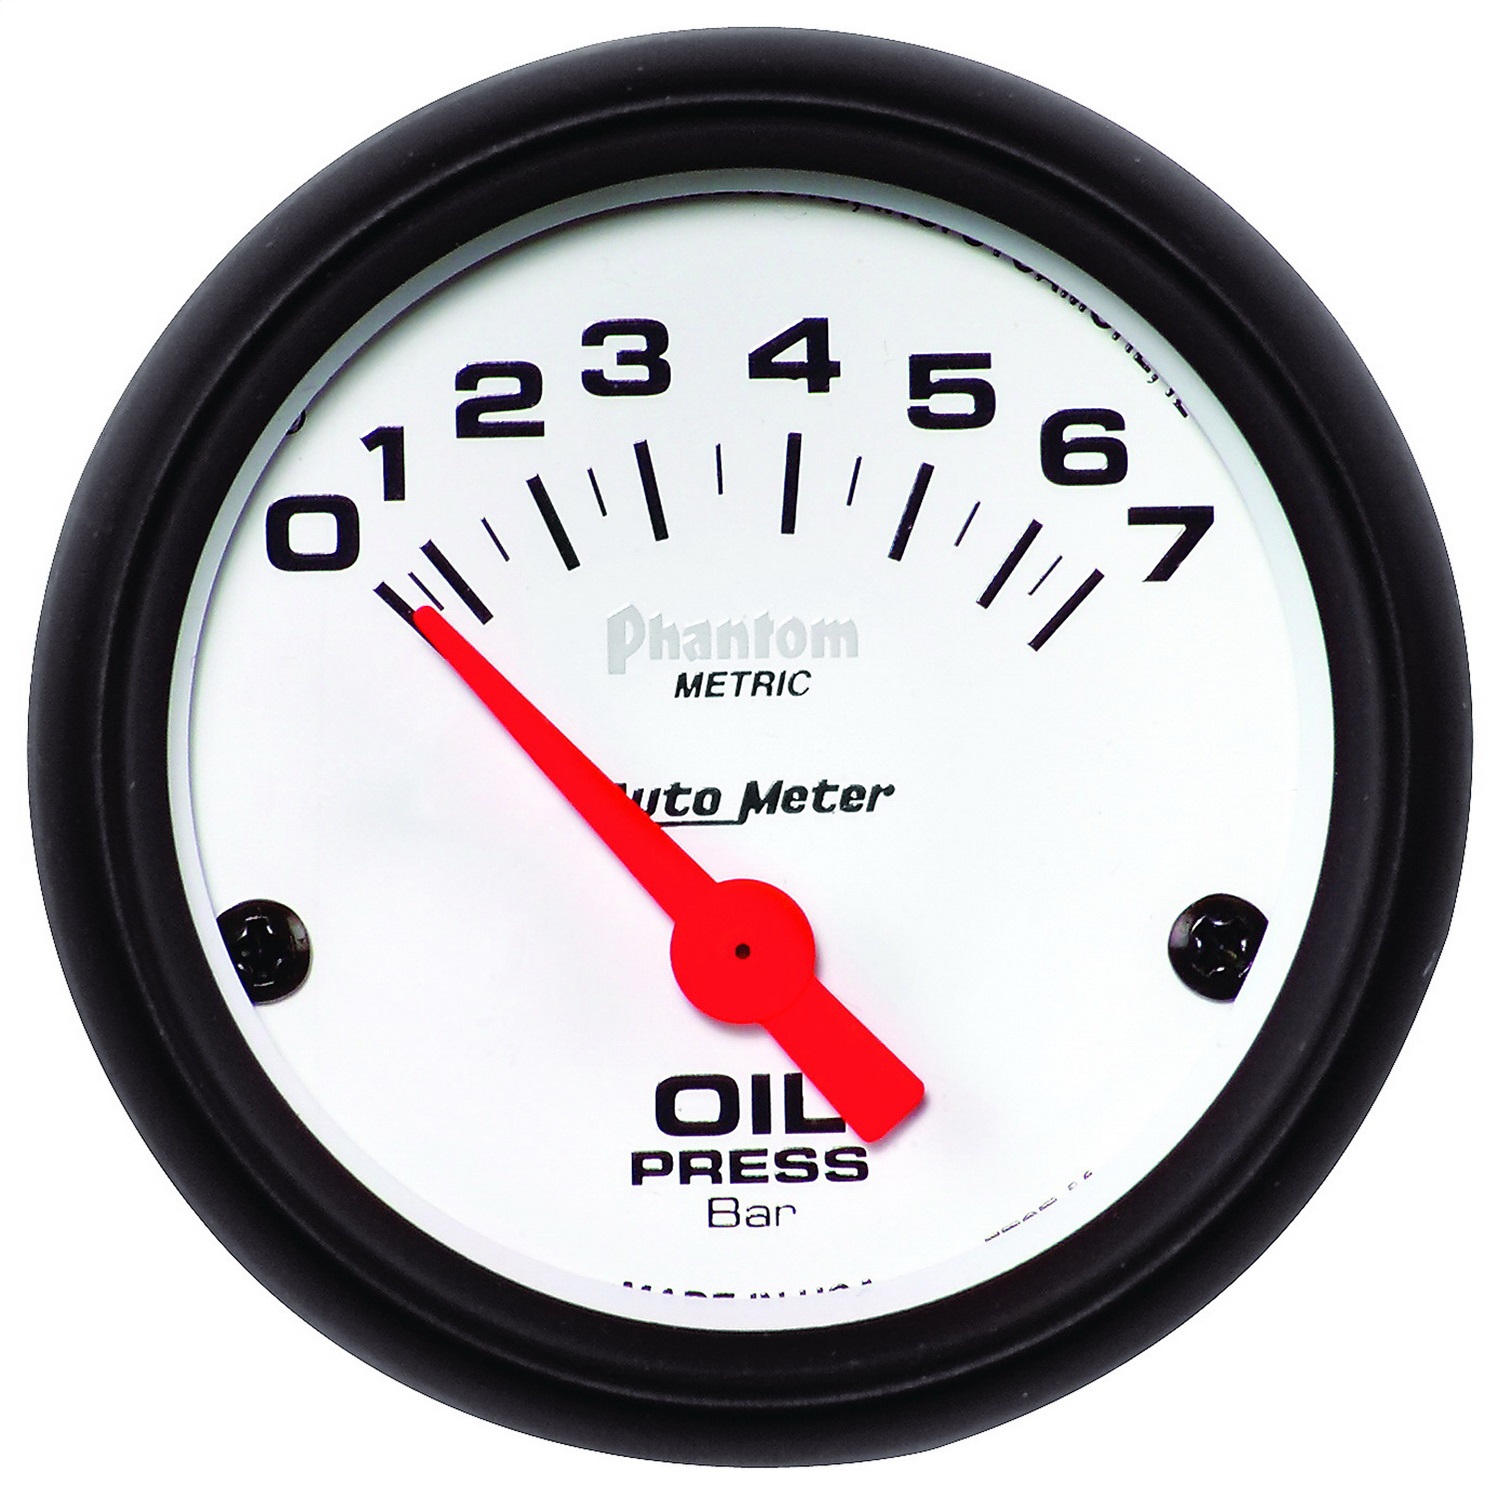 Auto Meter Auto Meter 5727-M Phantom; Electric Metric Oil Pressure Gauge